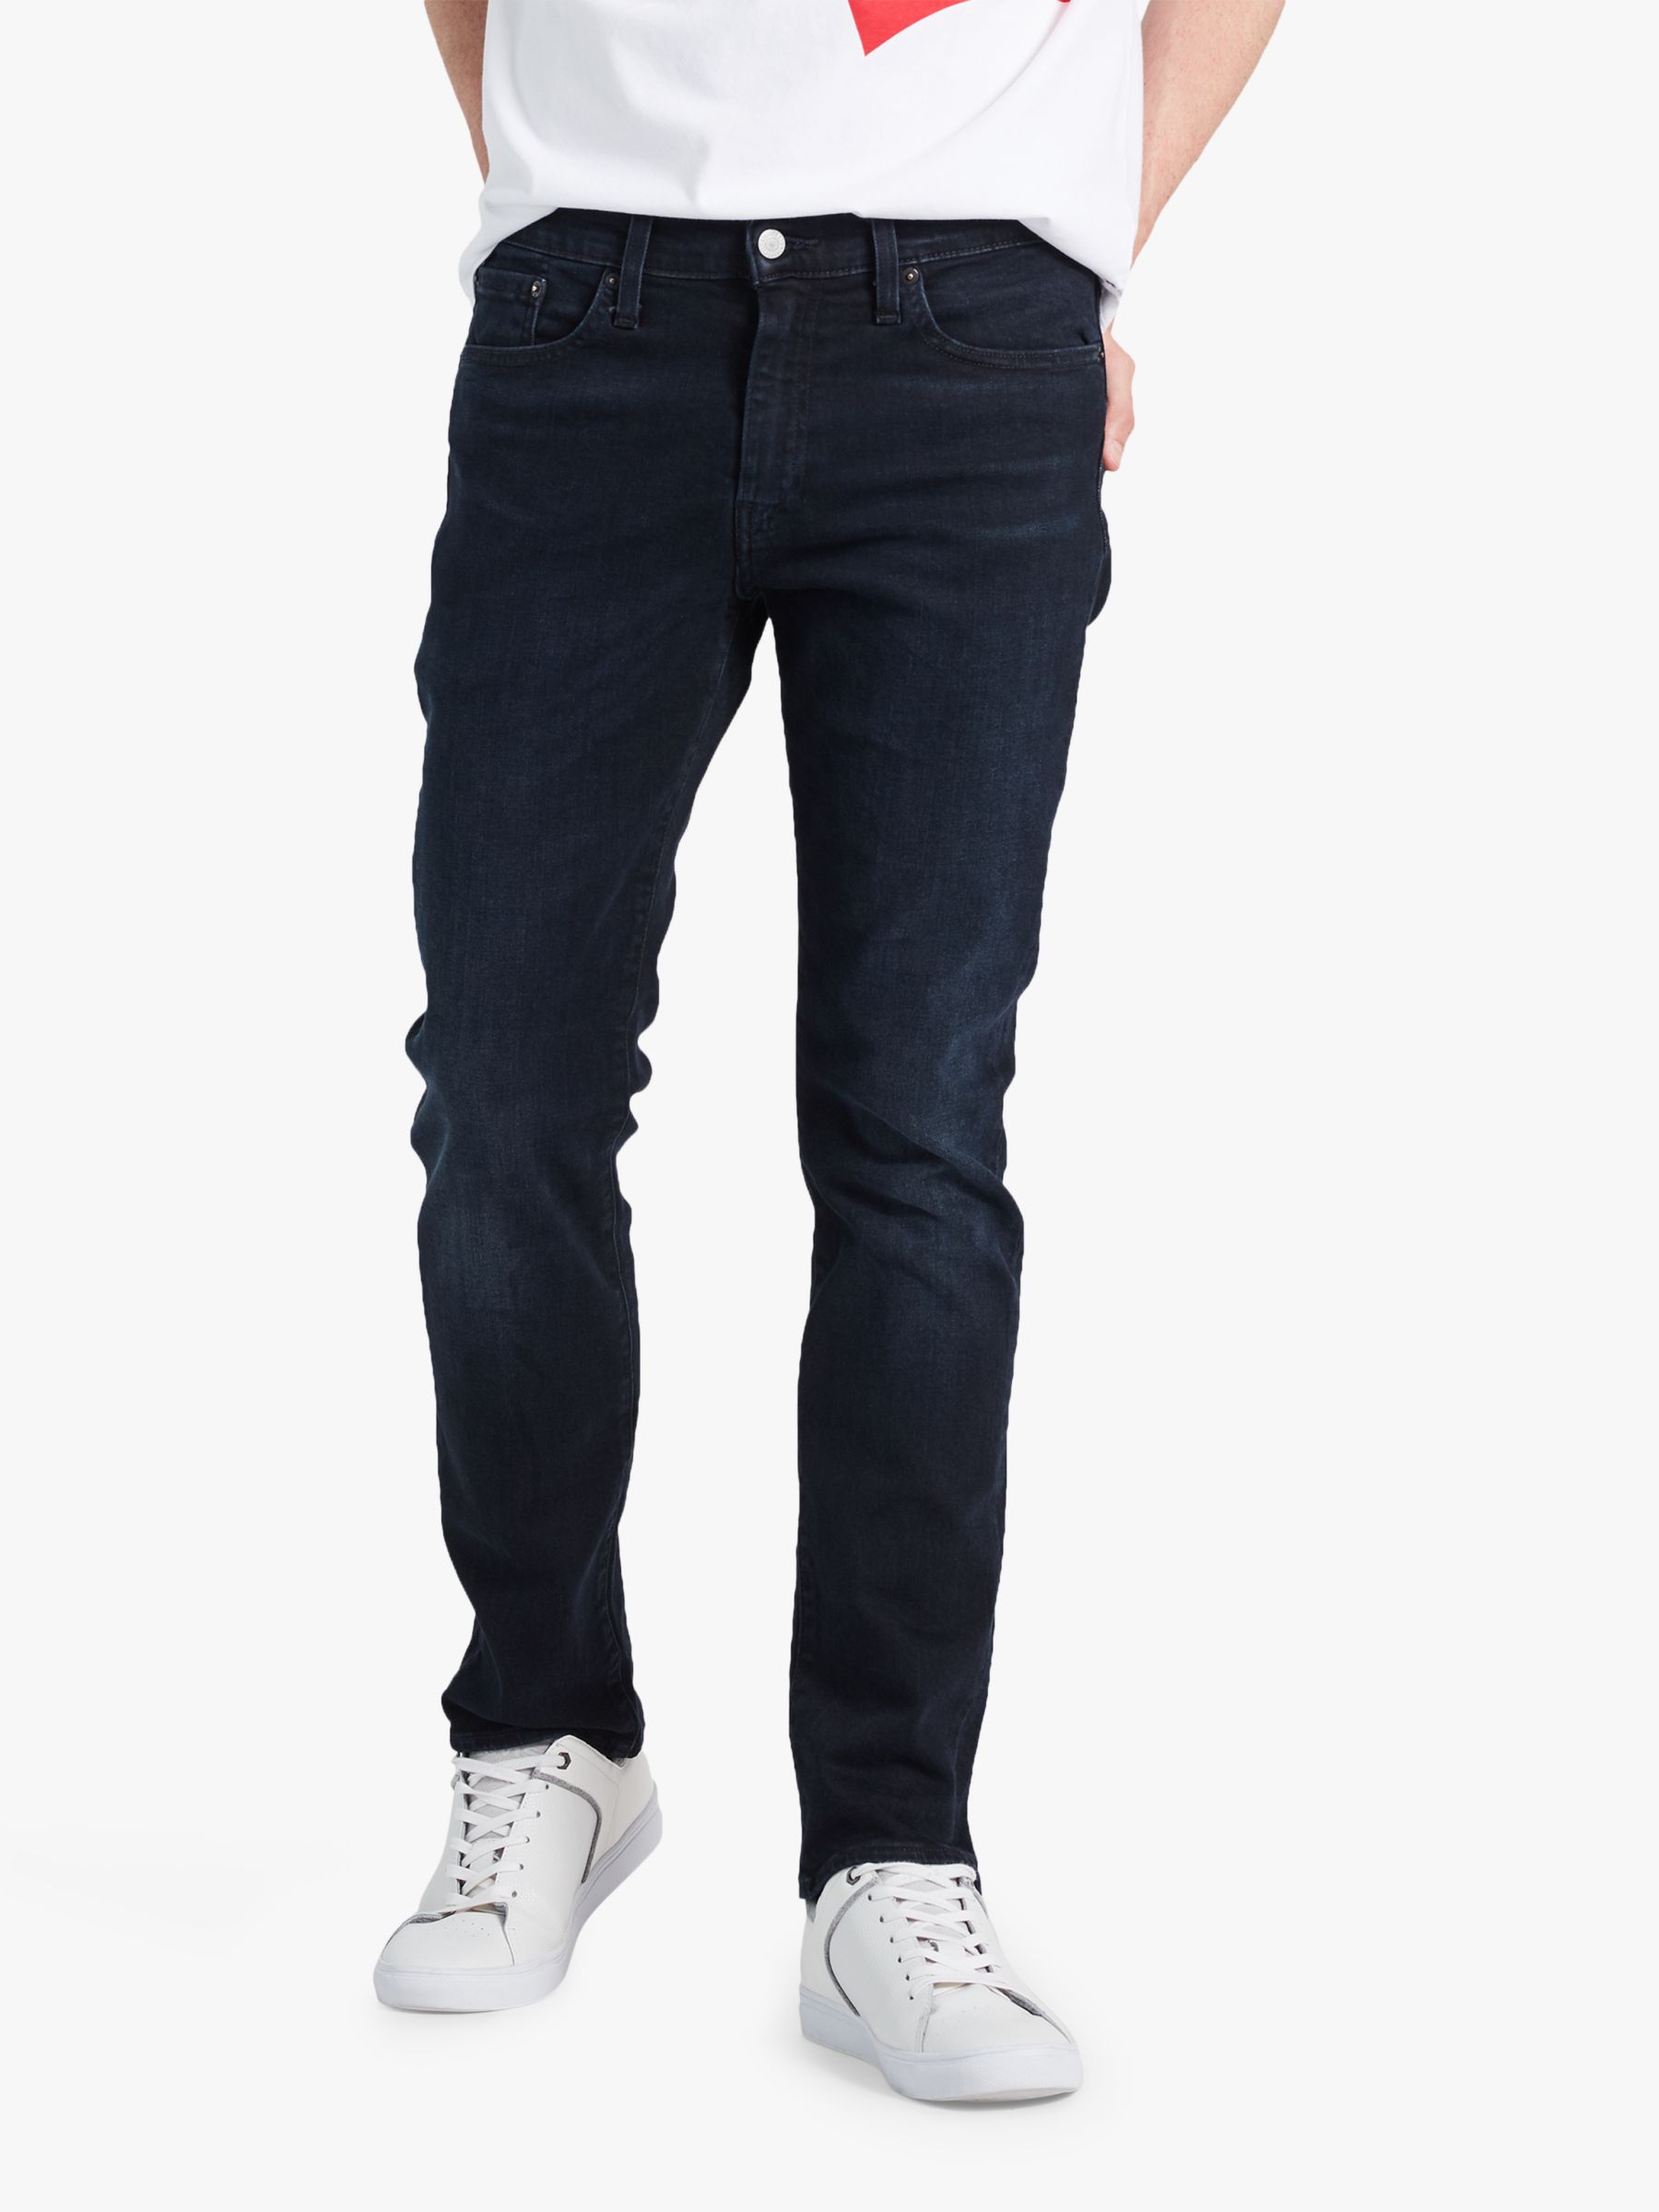 levis 511 slim jeans